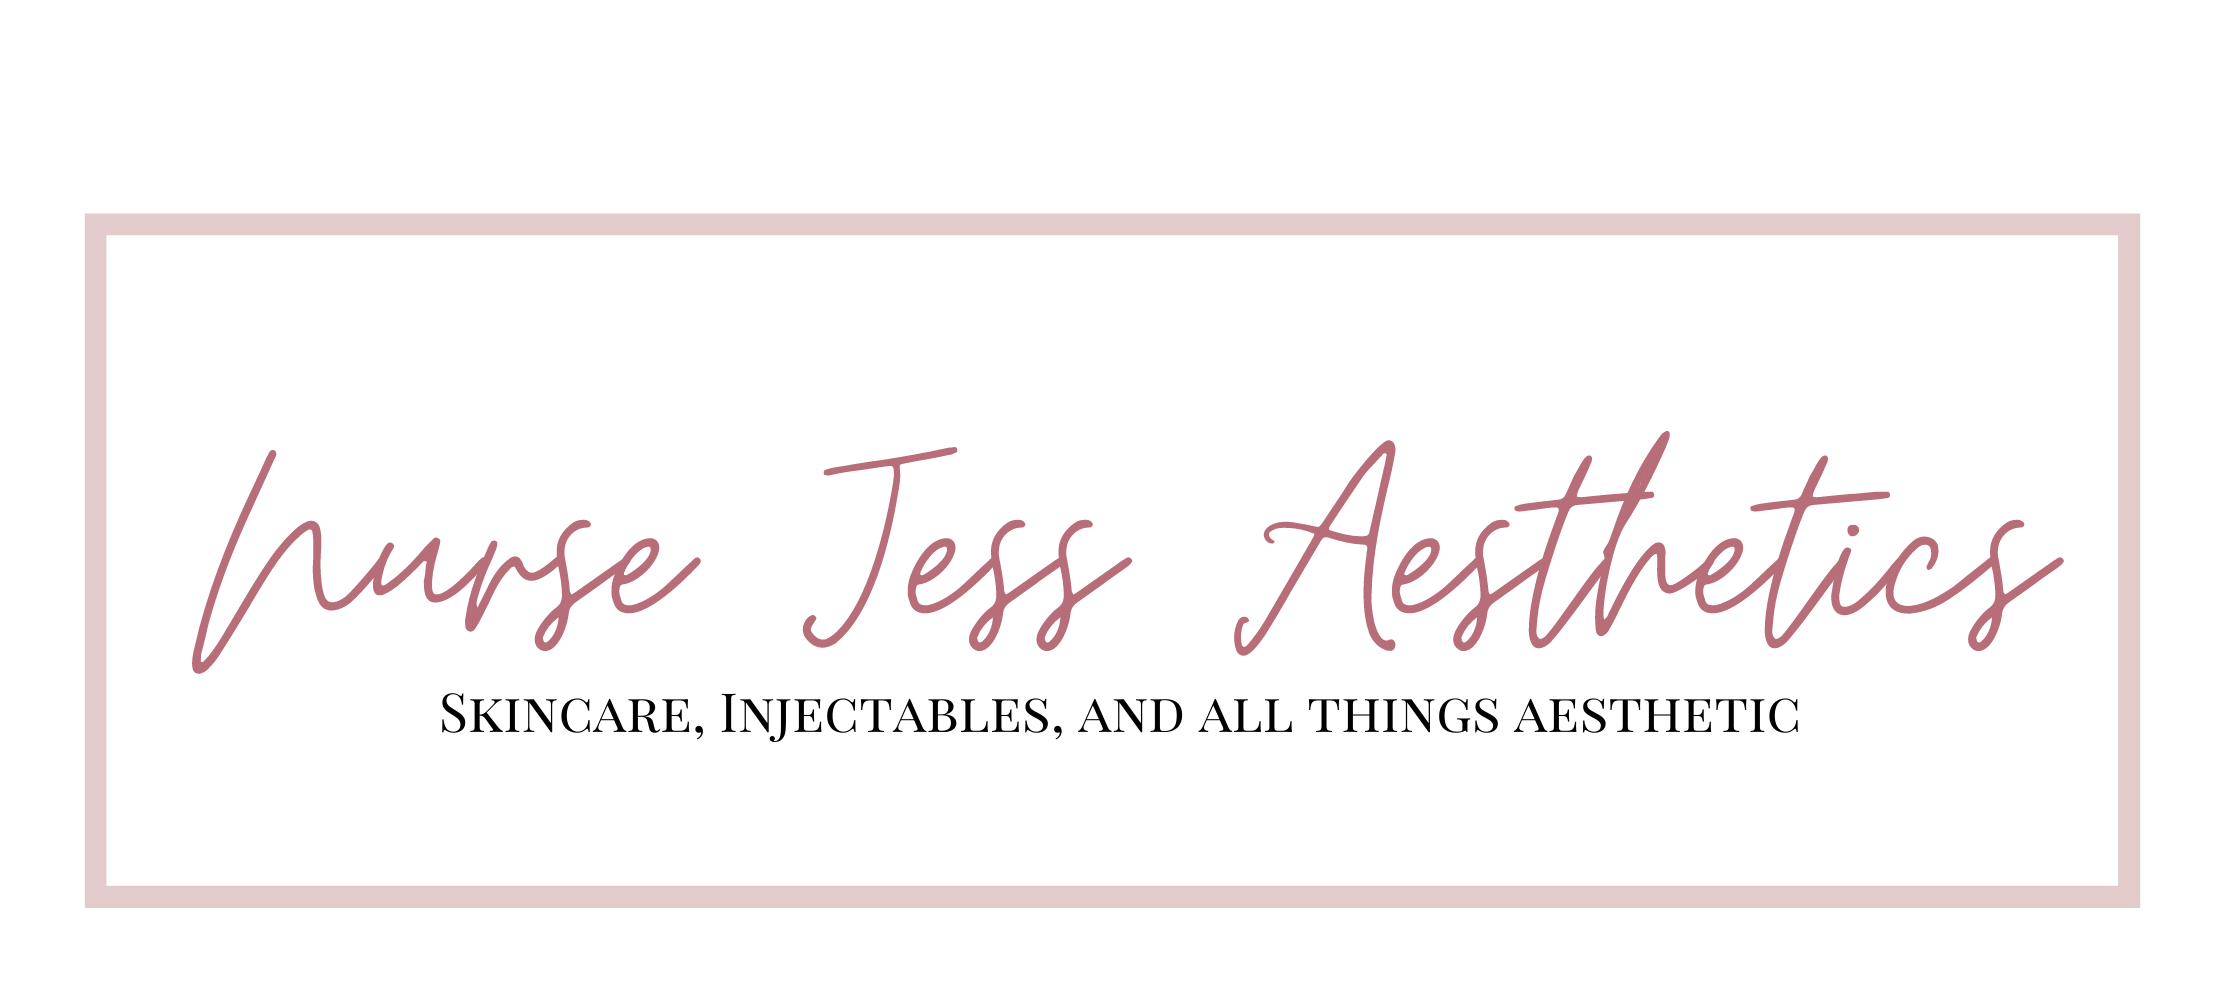 Nurse Jess Aesthetics